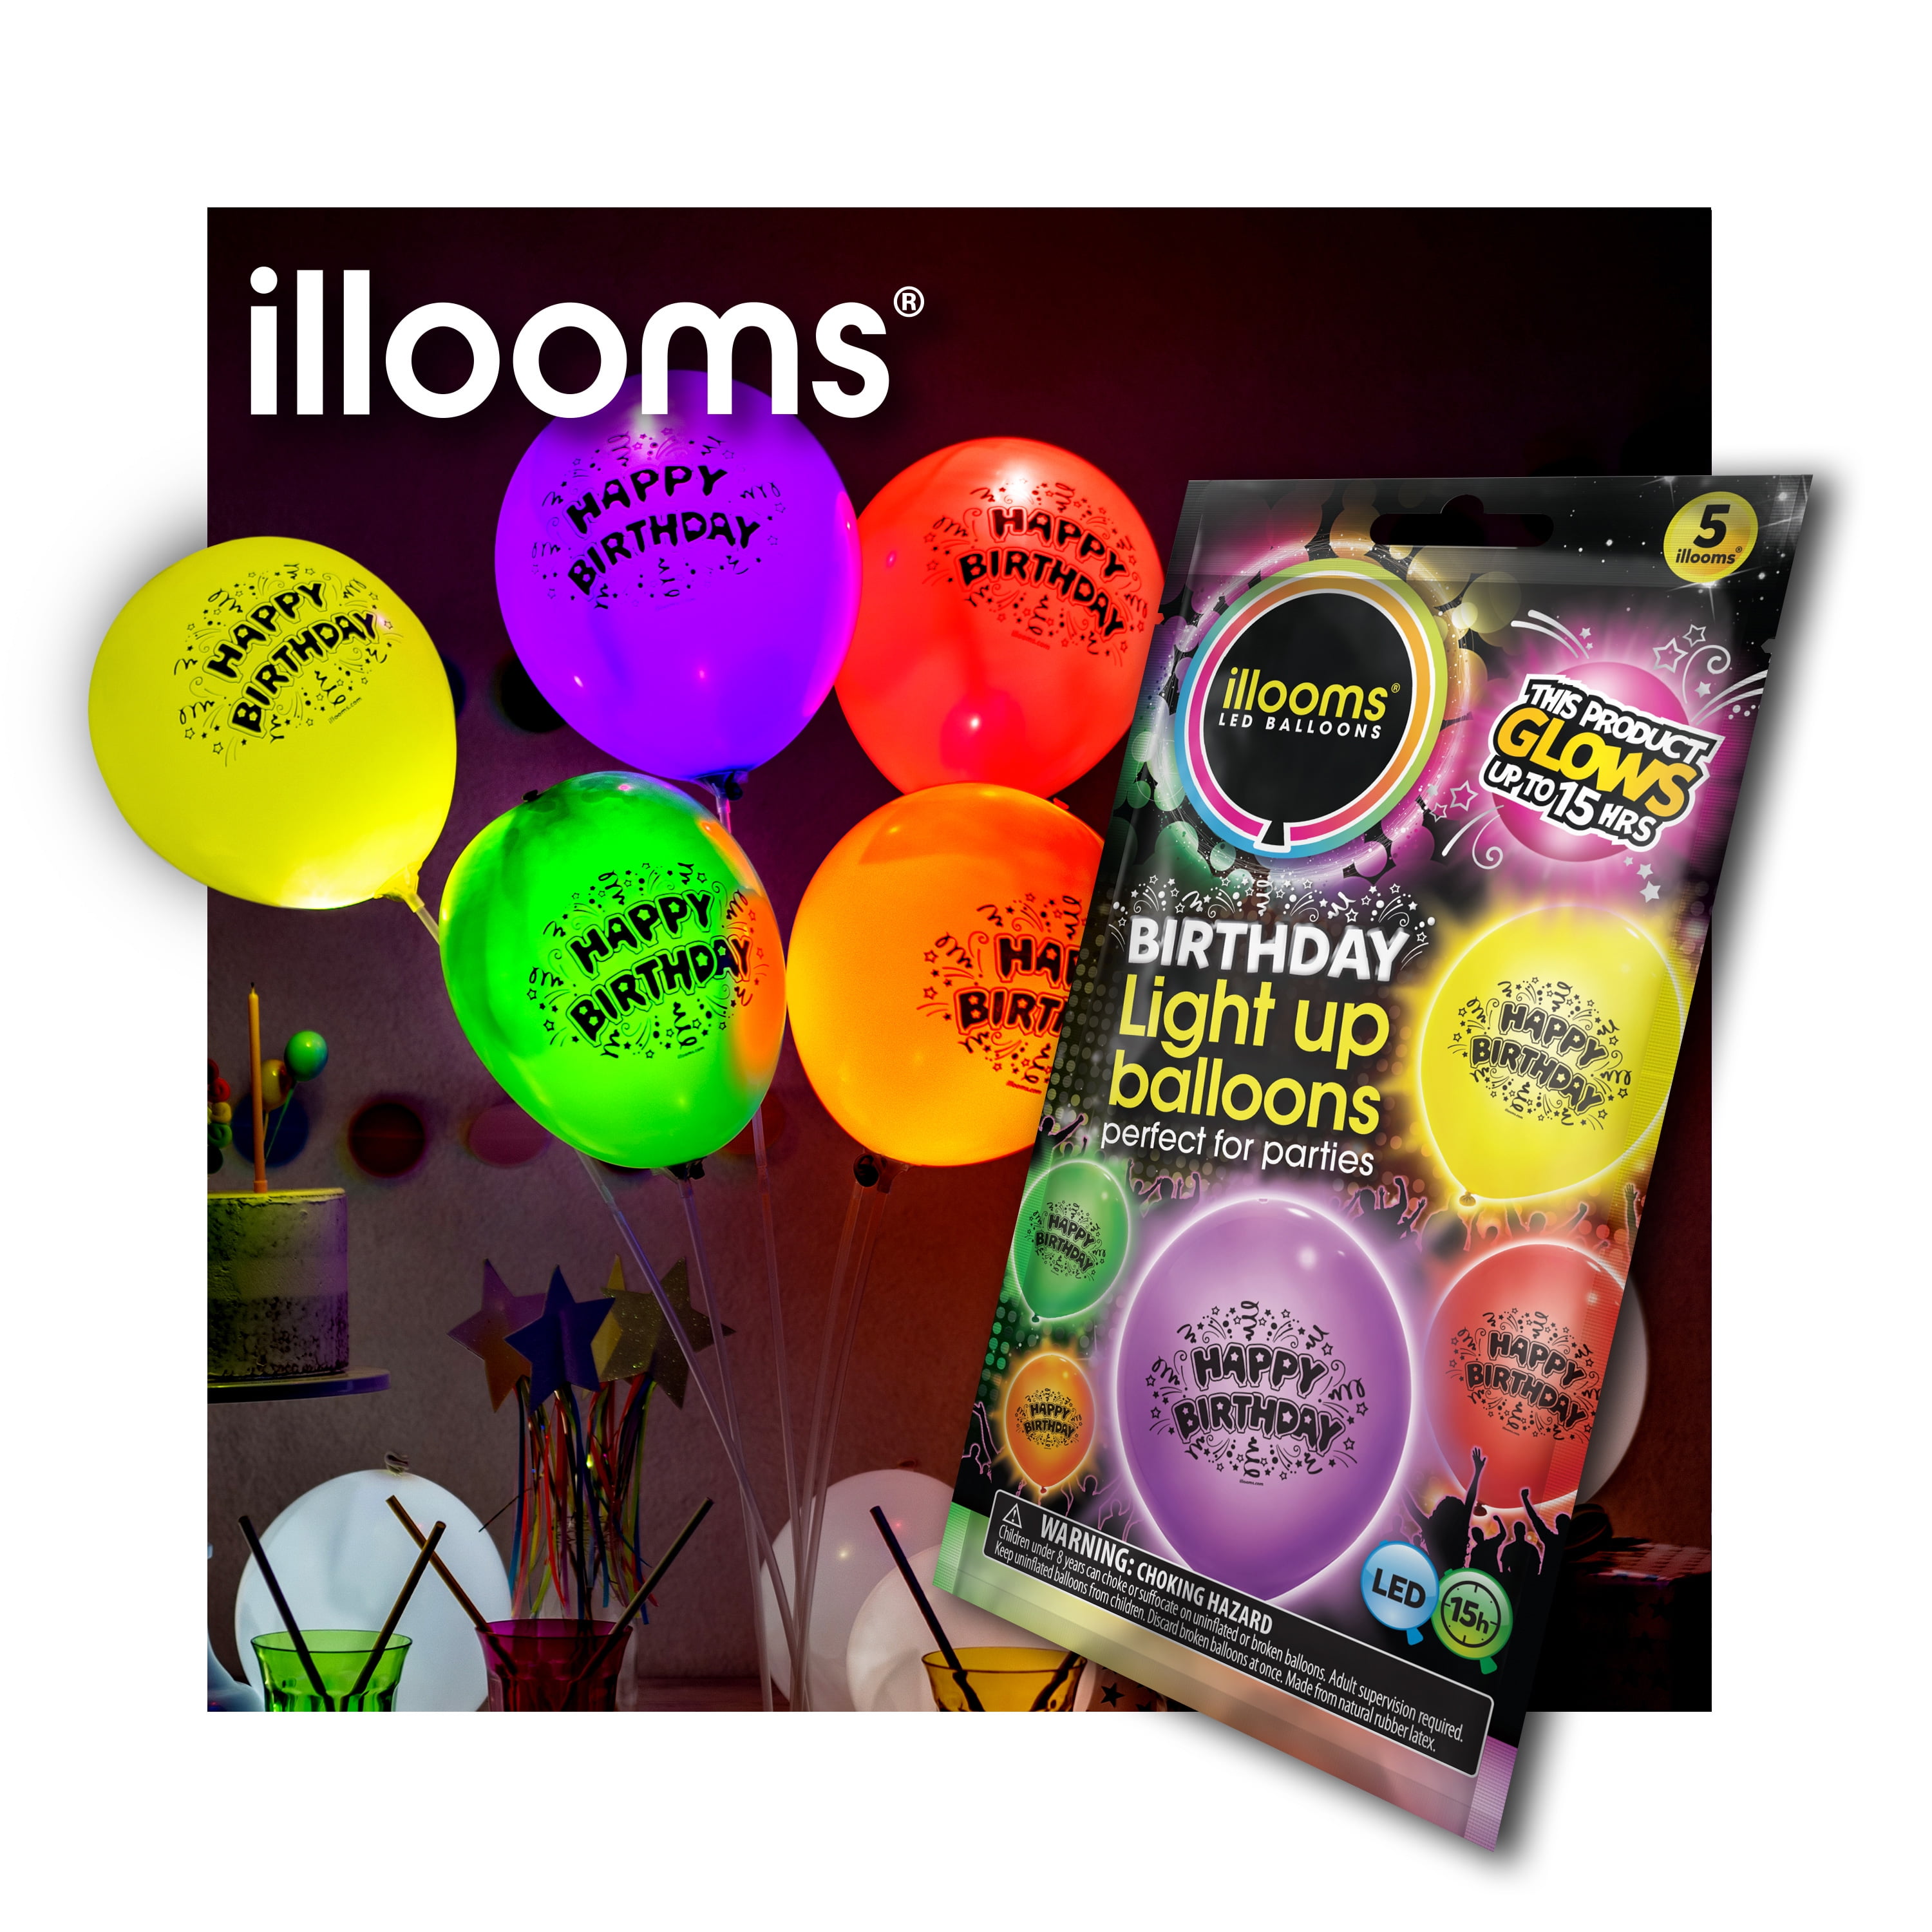 Illooms Printed Happy Birthday LightUp Balloons, 5pk, Mixed Colors